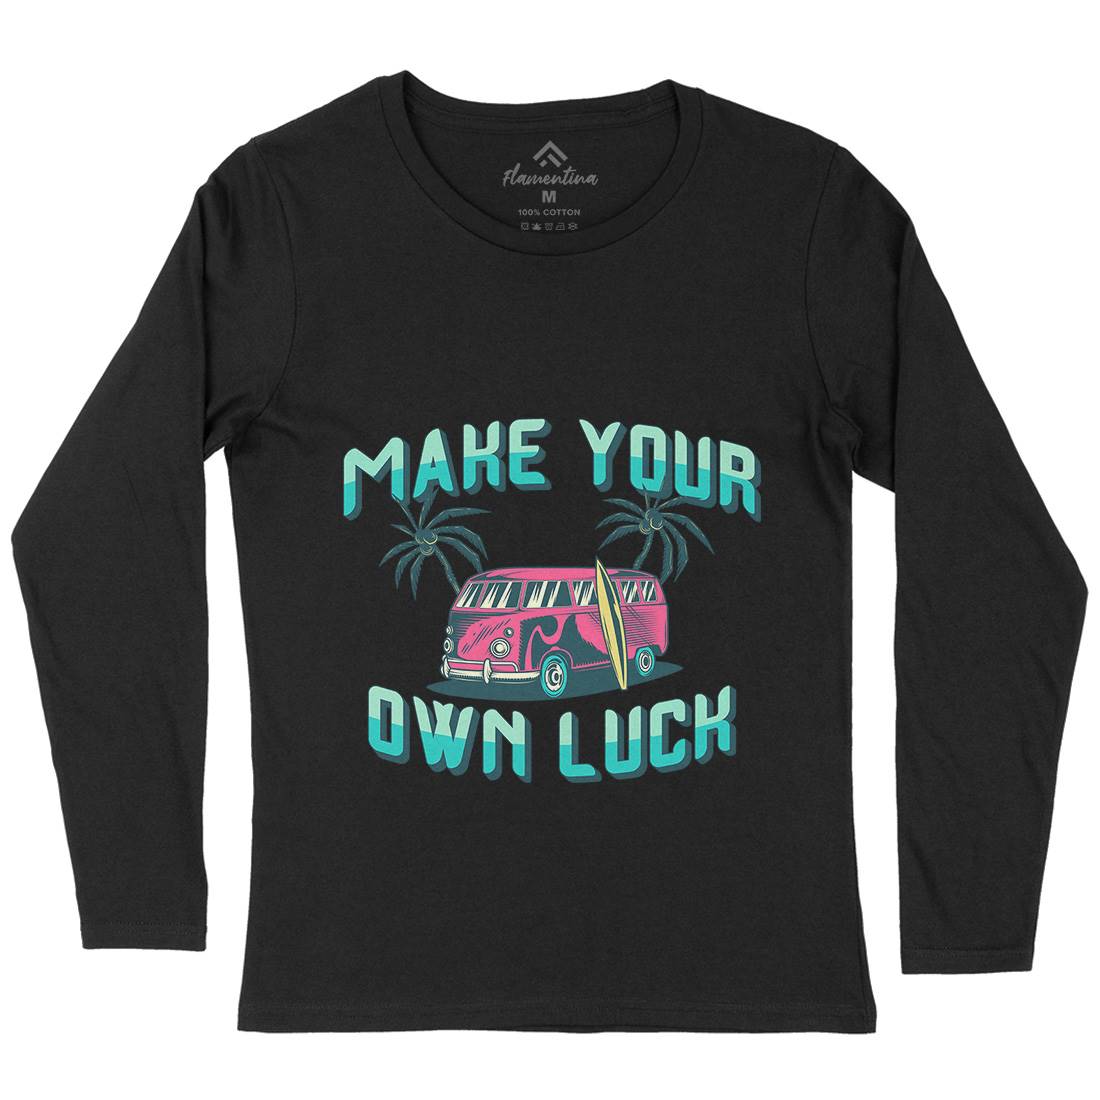 Make Your Own Luck Womens Long Sleeve T-Shirt Nature B307